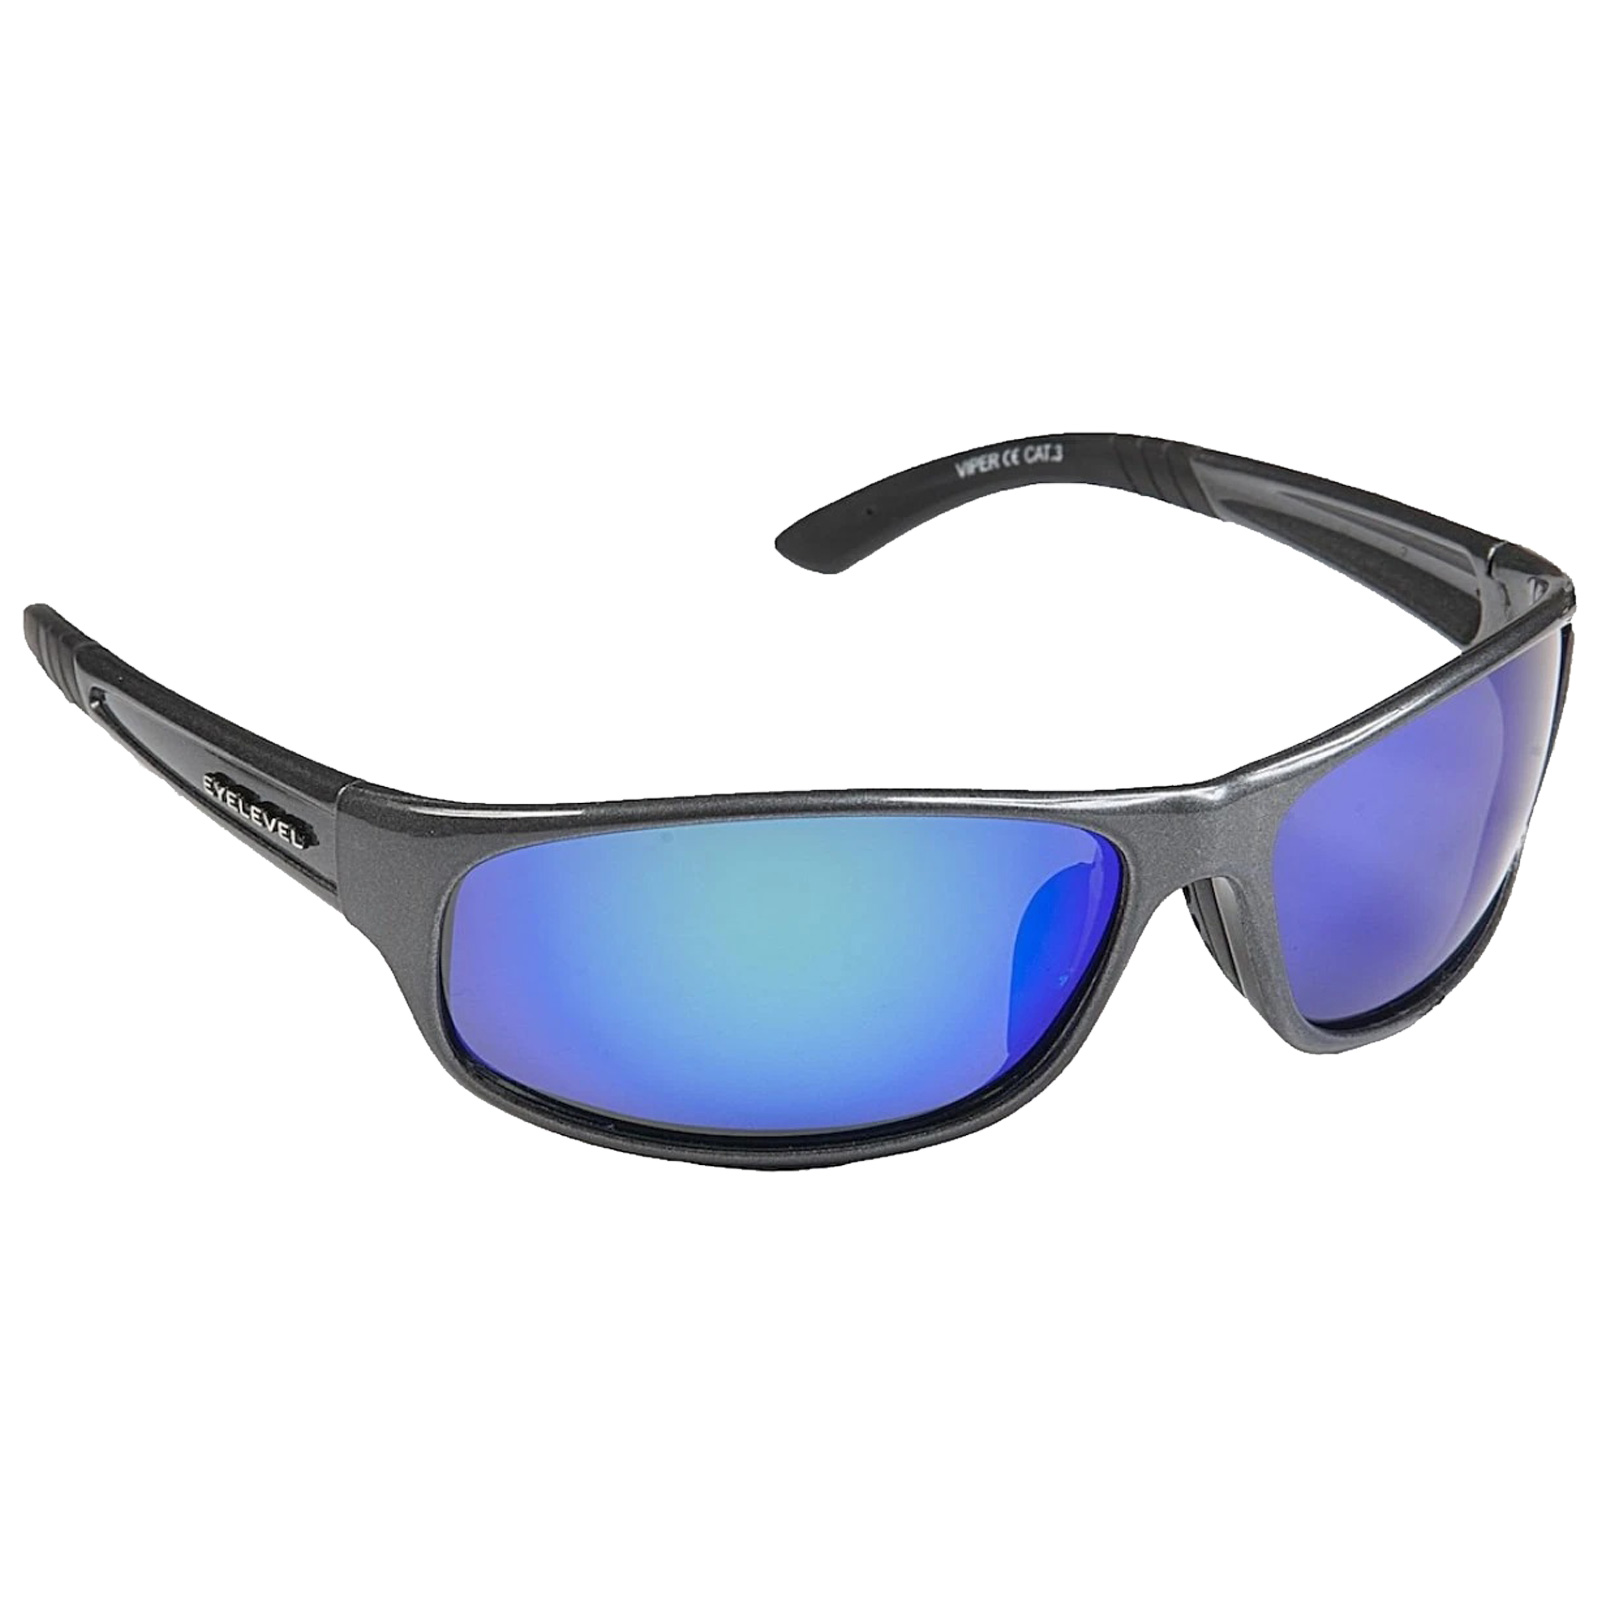 Eyelevel Mens Fashion Sunglasses UV400 UVA UVB Protection Designer Shades